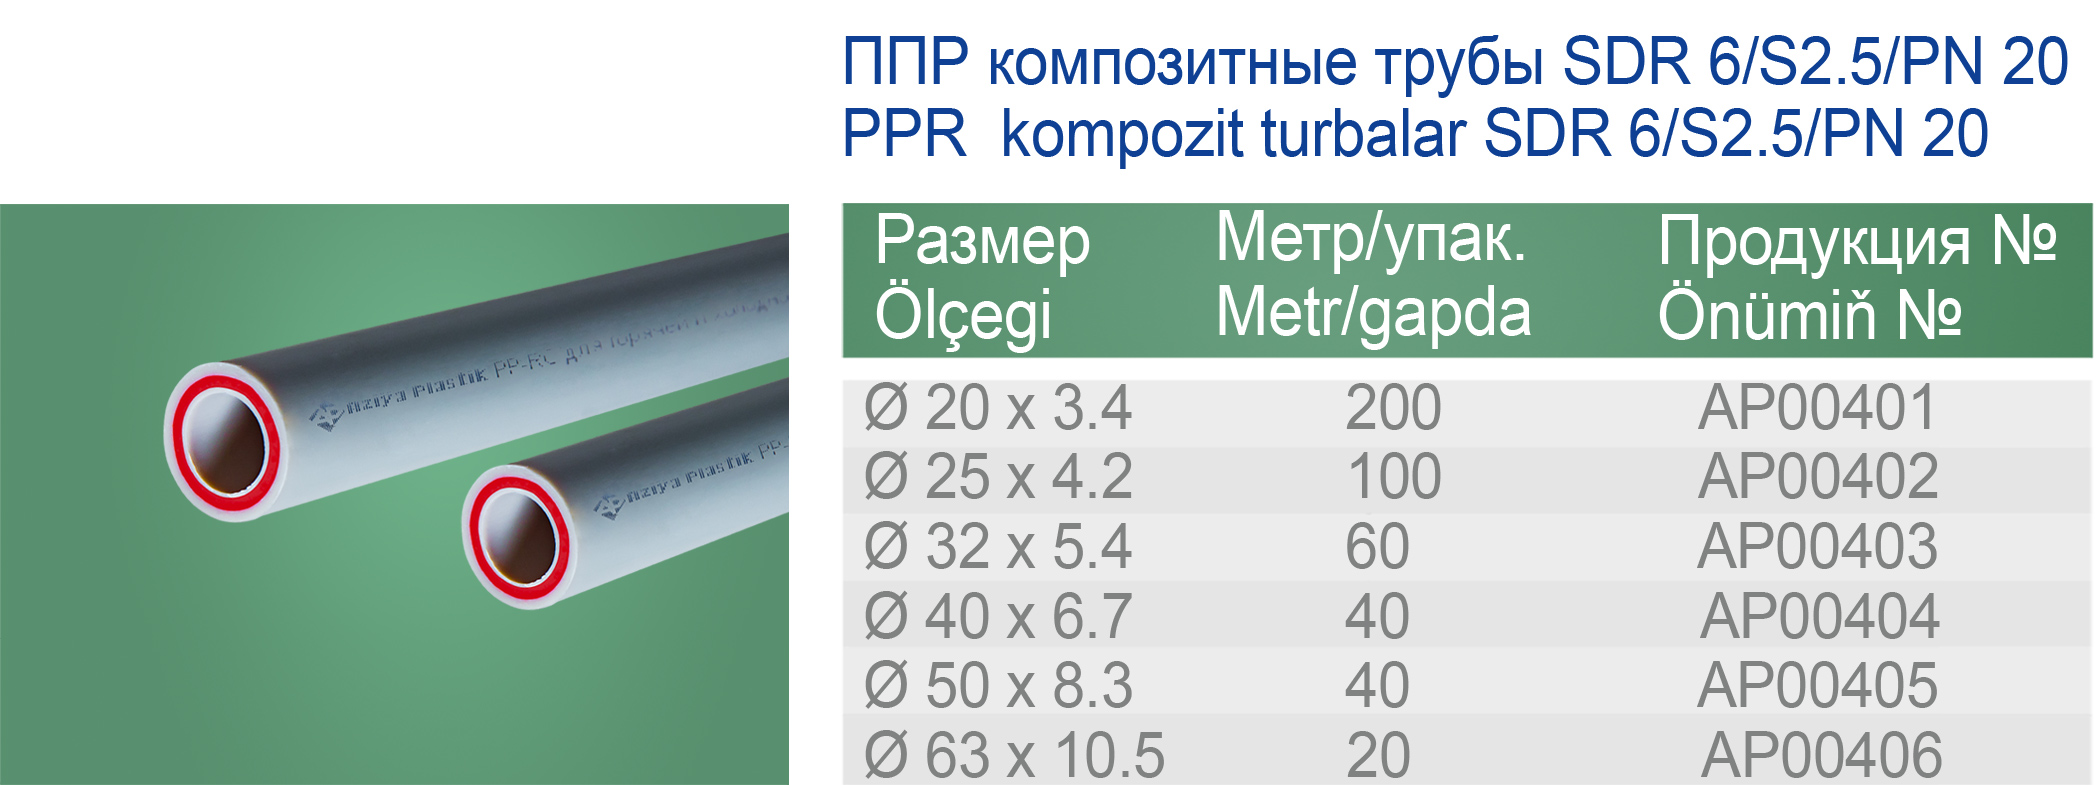  композитная труба АП PP-R pipe Ø63x10.5 SDR6/S2.5/PN20 .